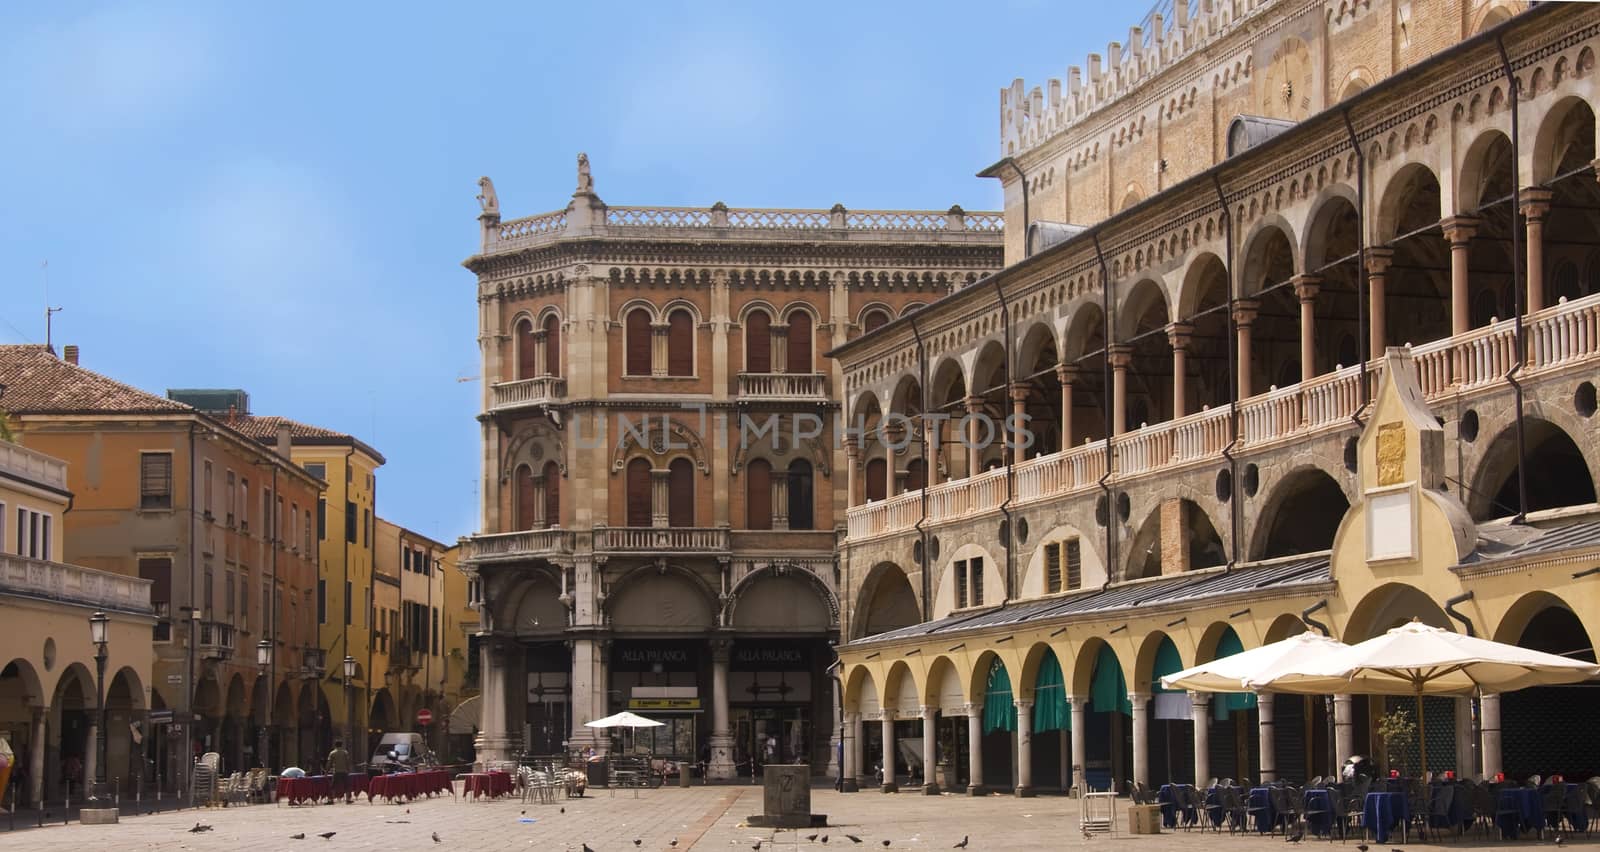 Palazzo della Ragione, palace in Padua and the fruit market square, Italy